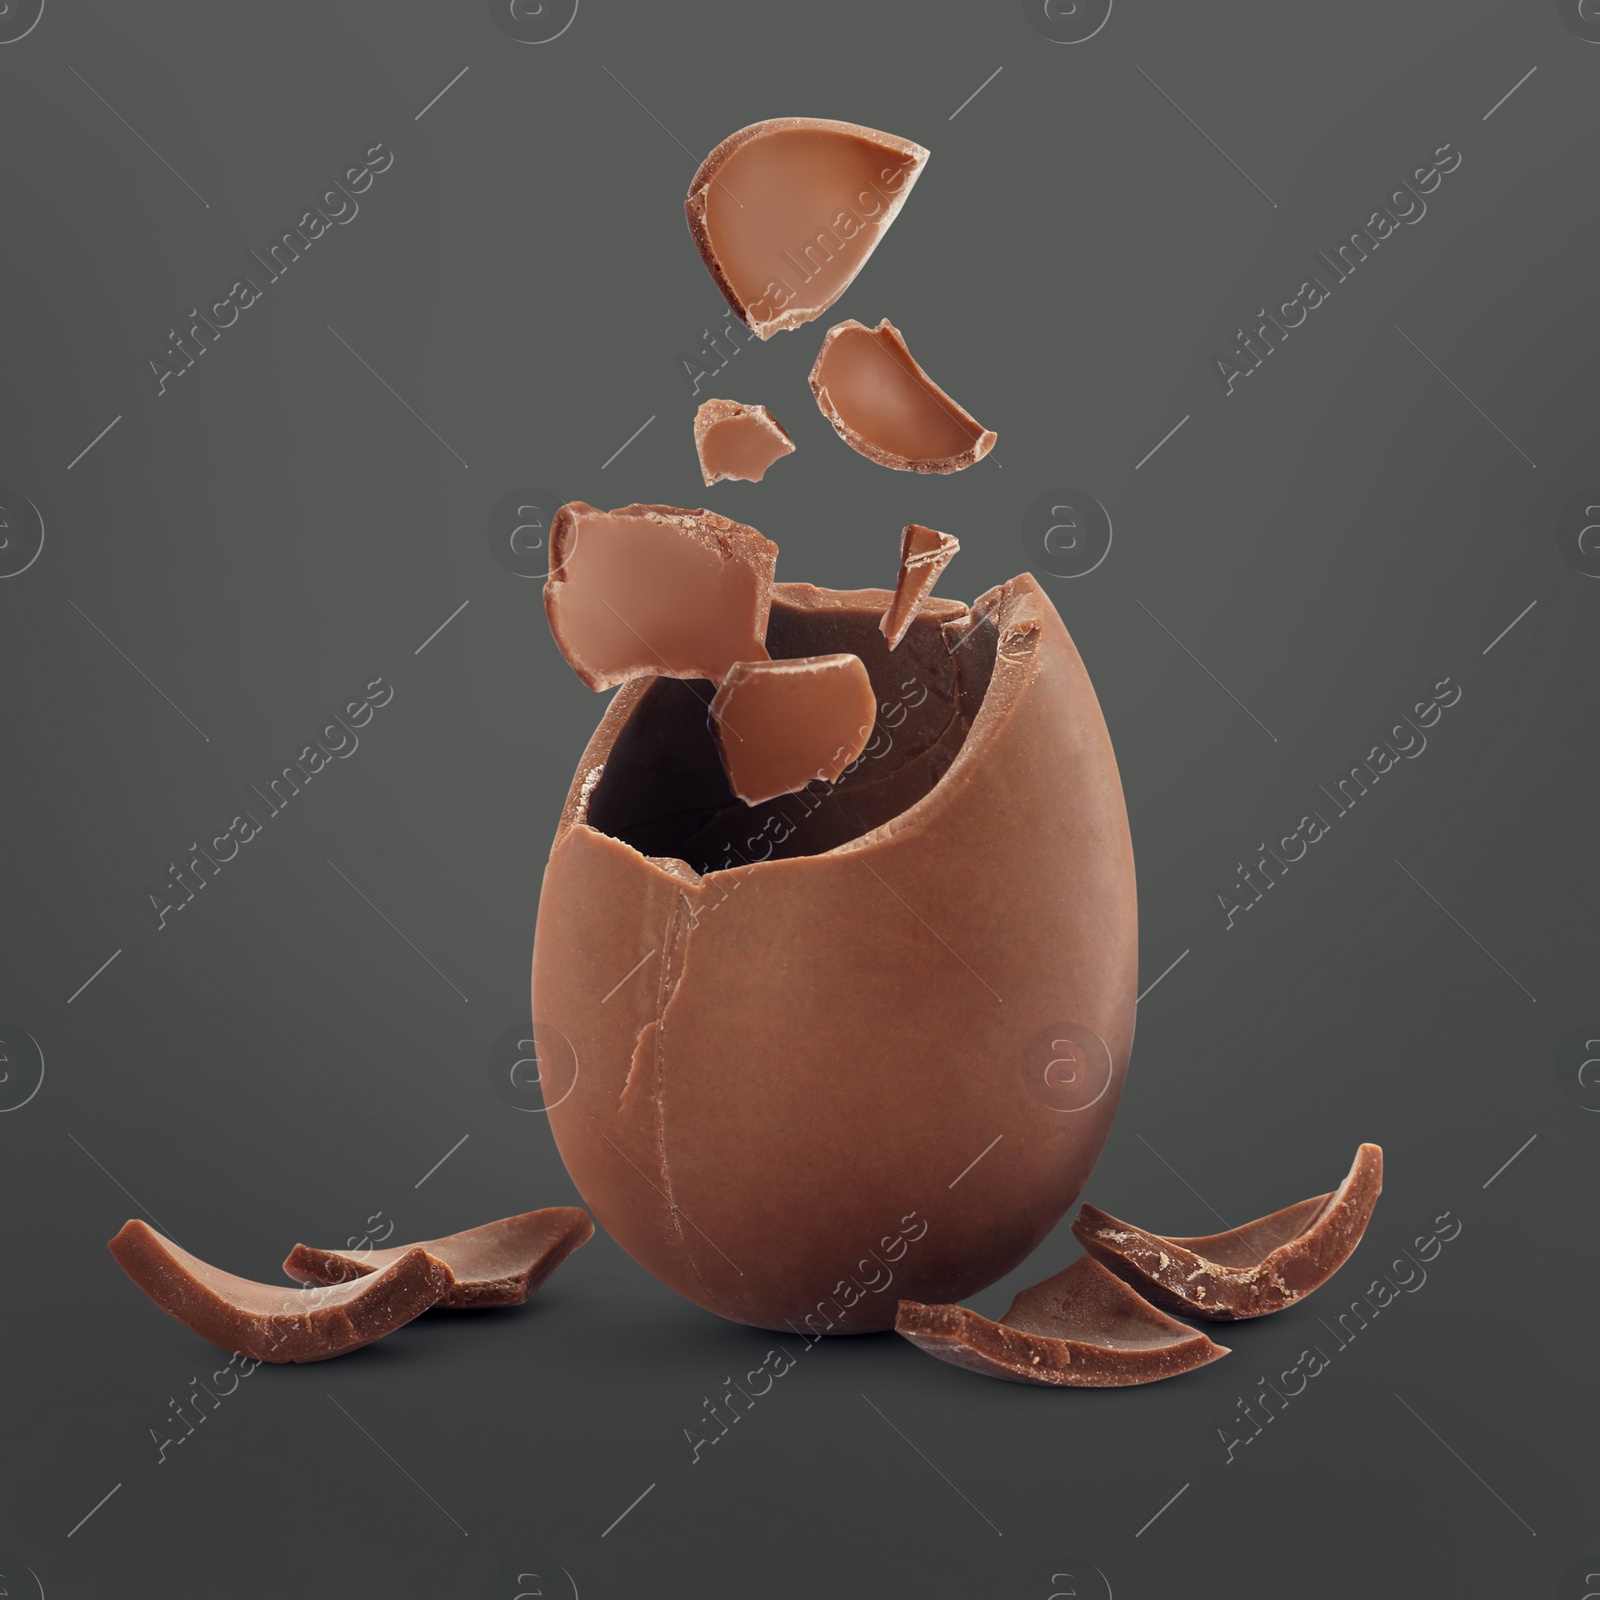 Image of Exploded milk chocolate egg on dark grey background